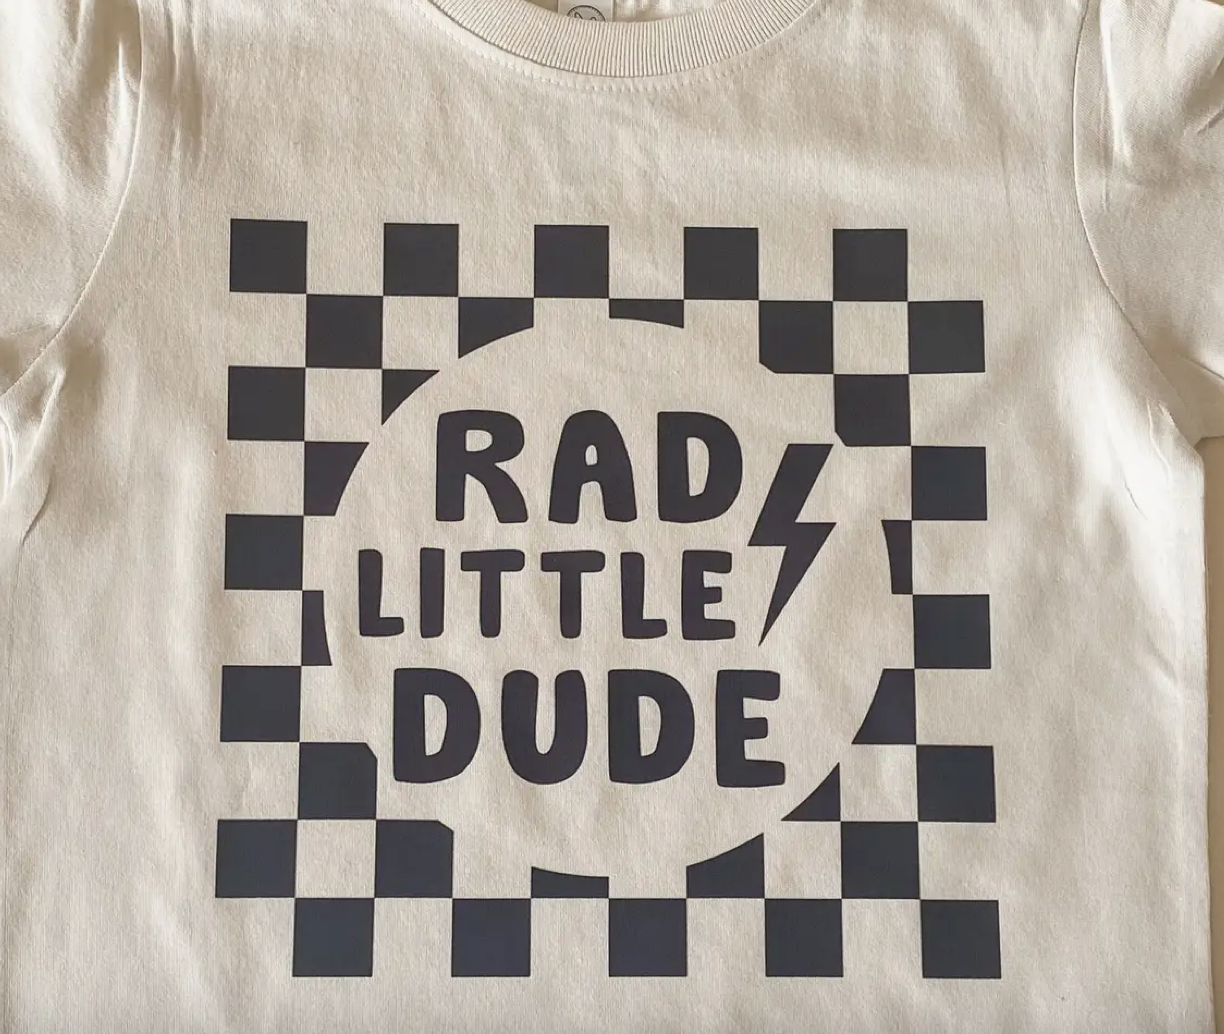 Rad Little Dude Tee